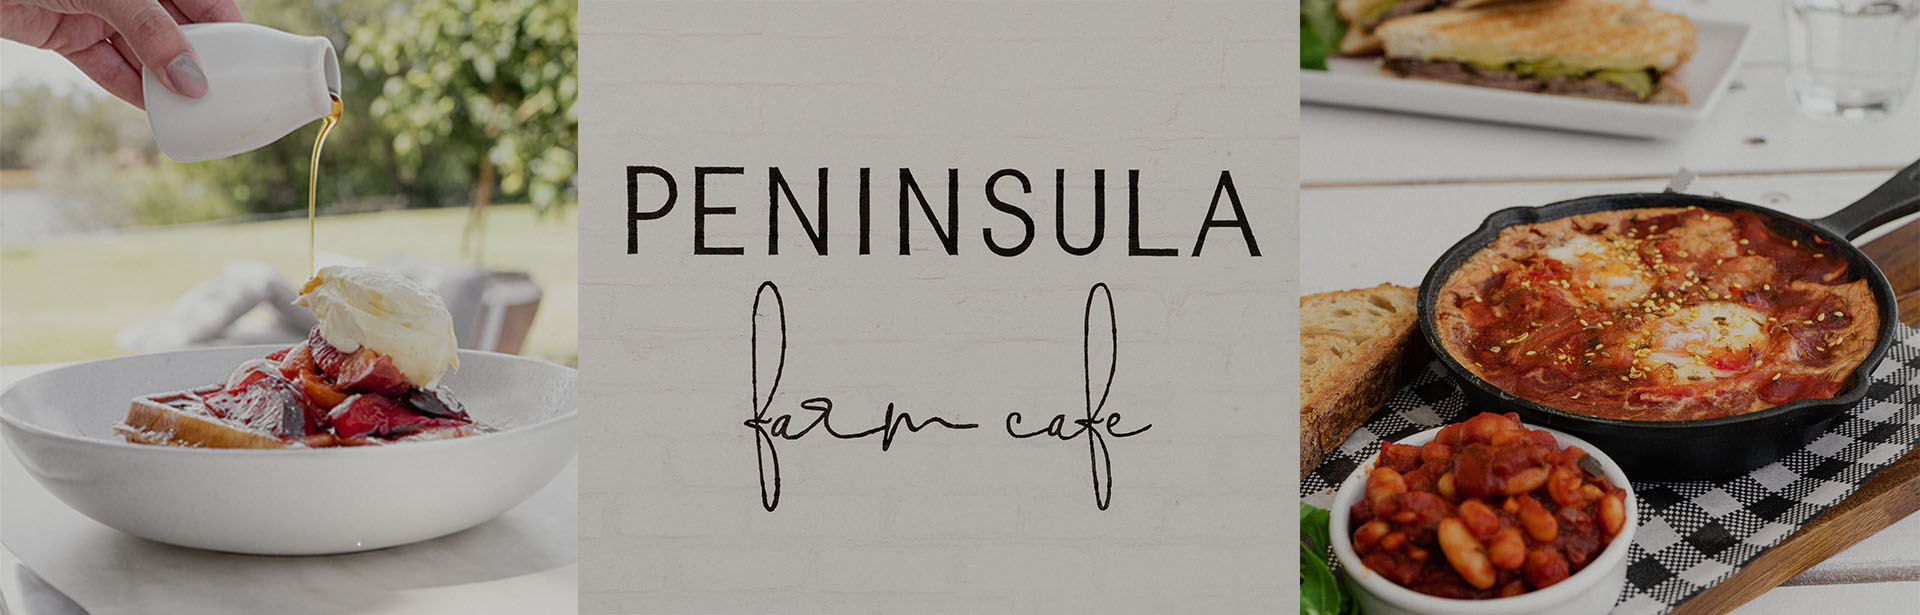 Peninsula Farm Café opens its doors once again